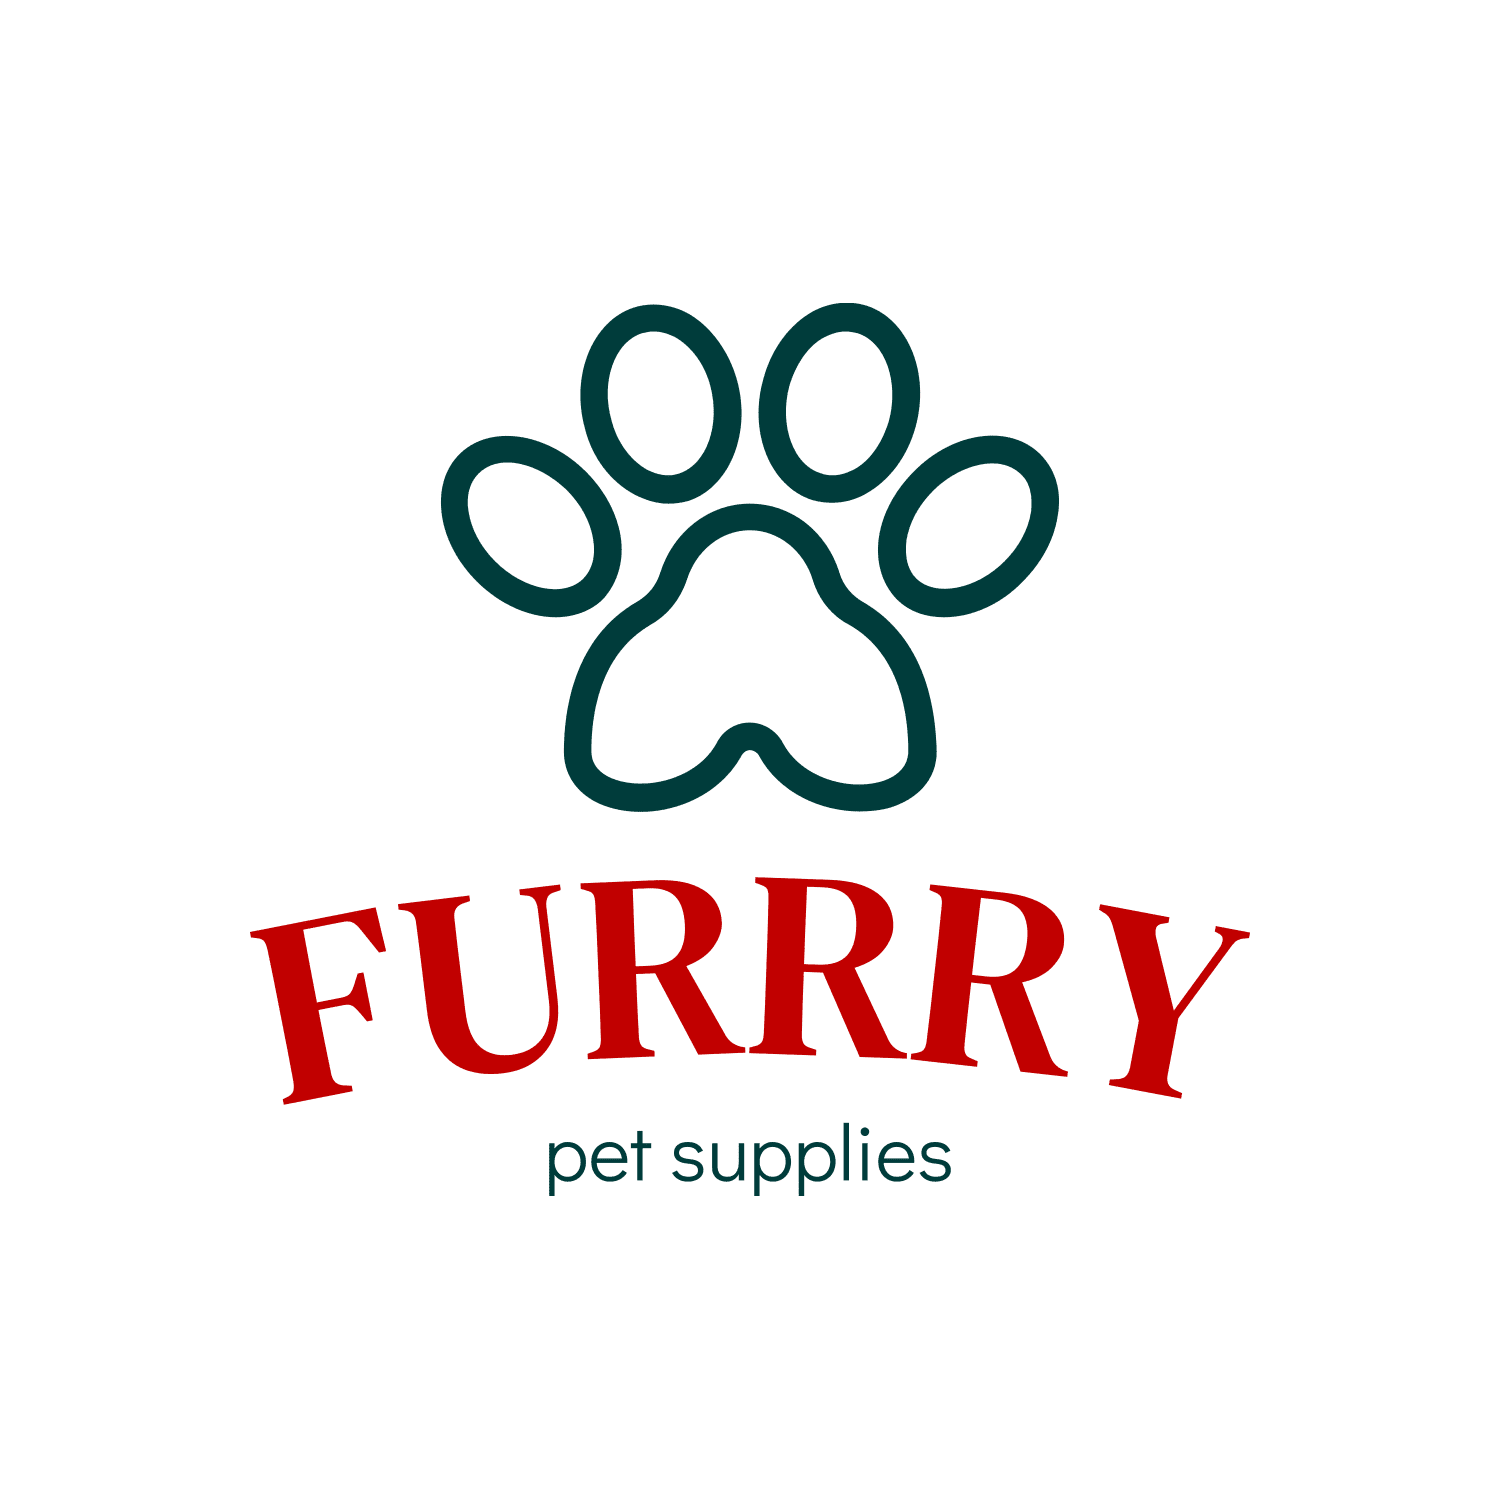 Furrry Pet Supplies - Sheffield, South Yorkshire S20 7PL - 01142 058325 | ShowMeLocal.com